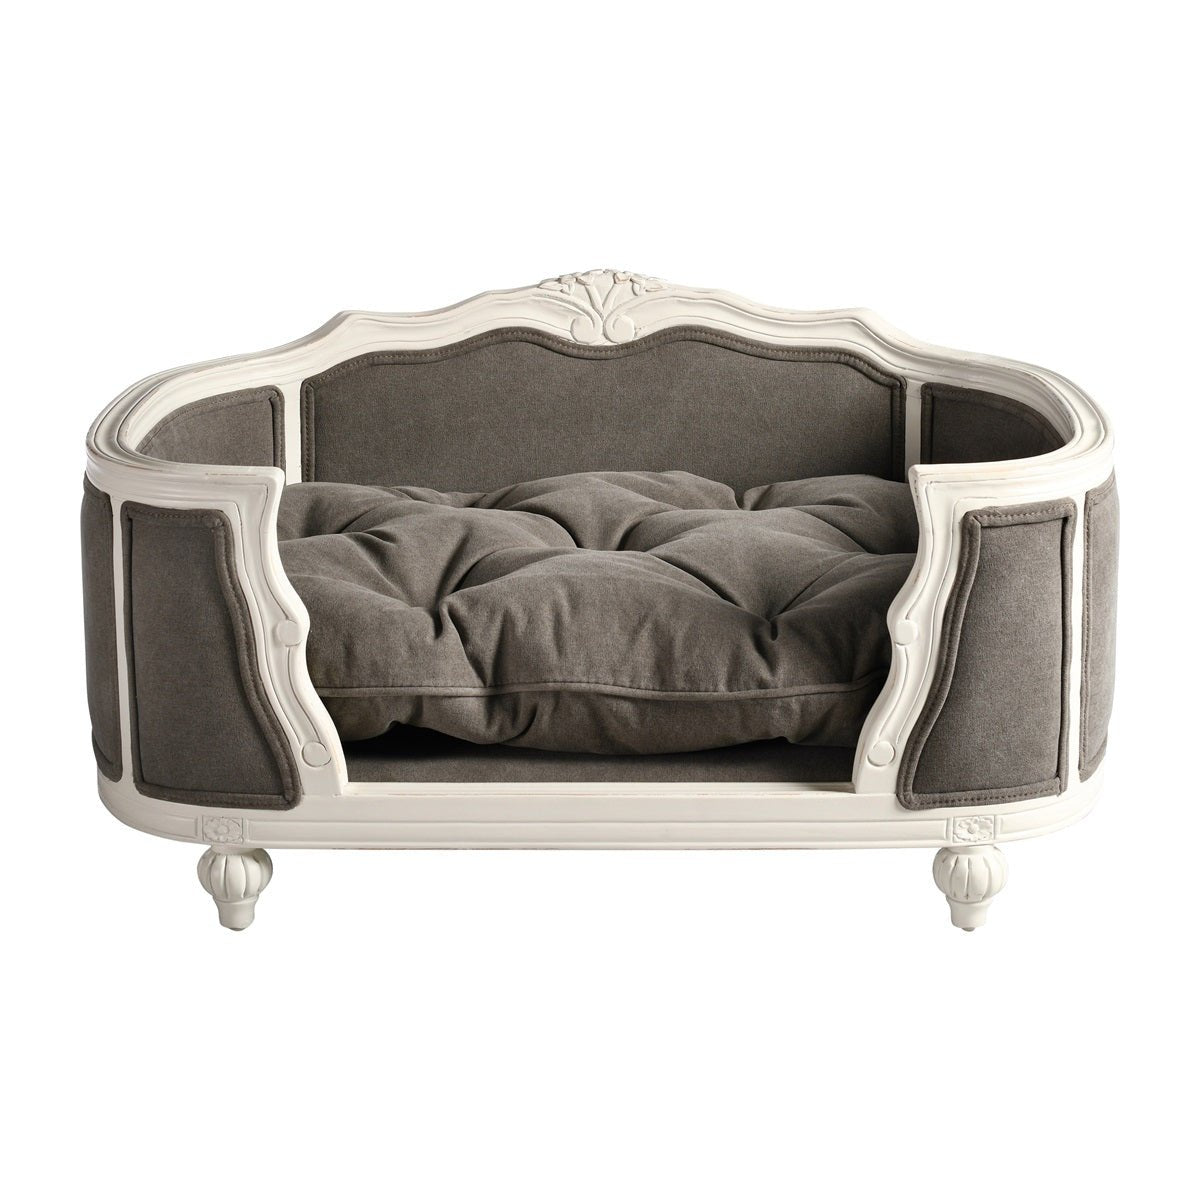 PARLO00465S - Arthur verhoiltu design sänky - Kivipesty harmaa - S (60 x 45 x 34cm) - Muotitassu